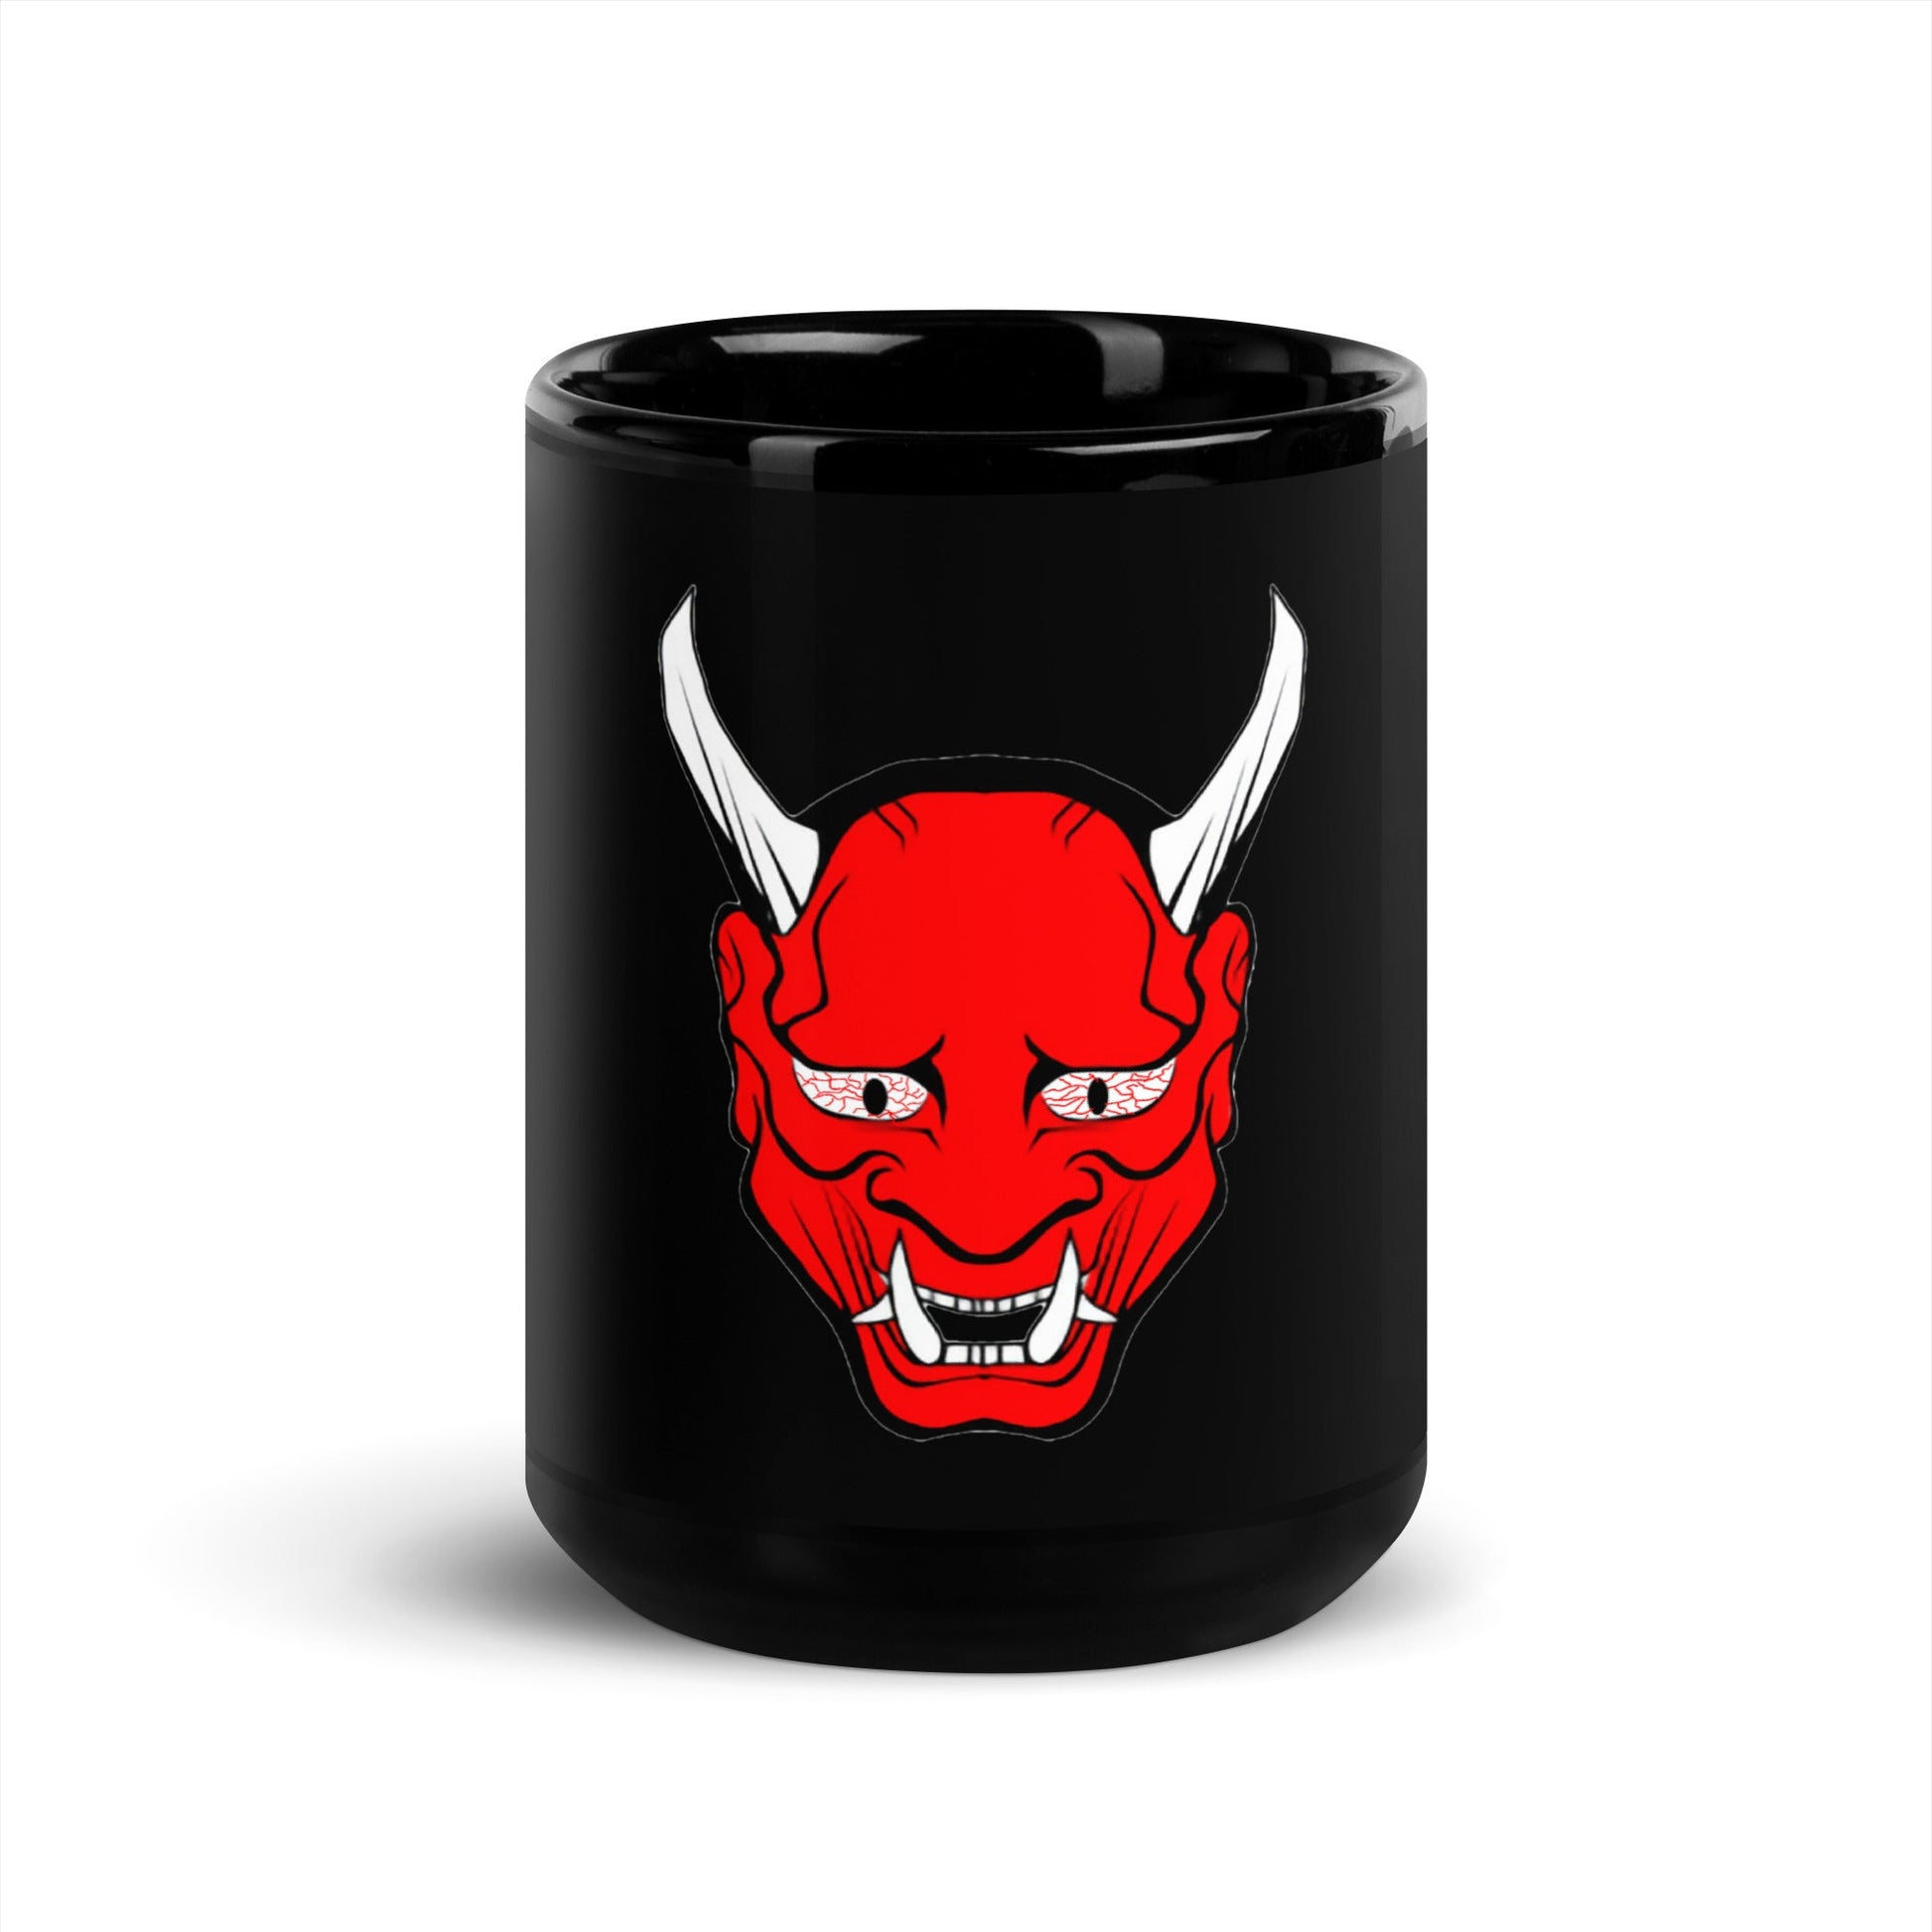 LORD SATAN 666 Red and Black Glossy Mug - Lizard Vigilante